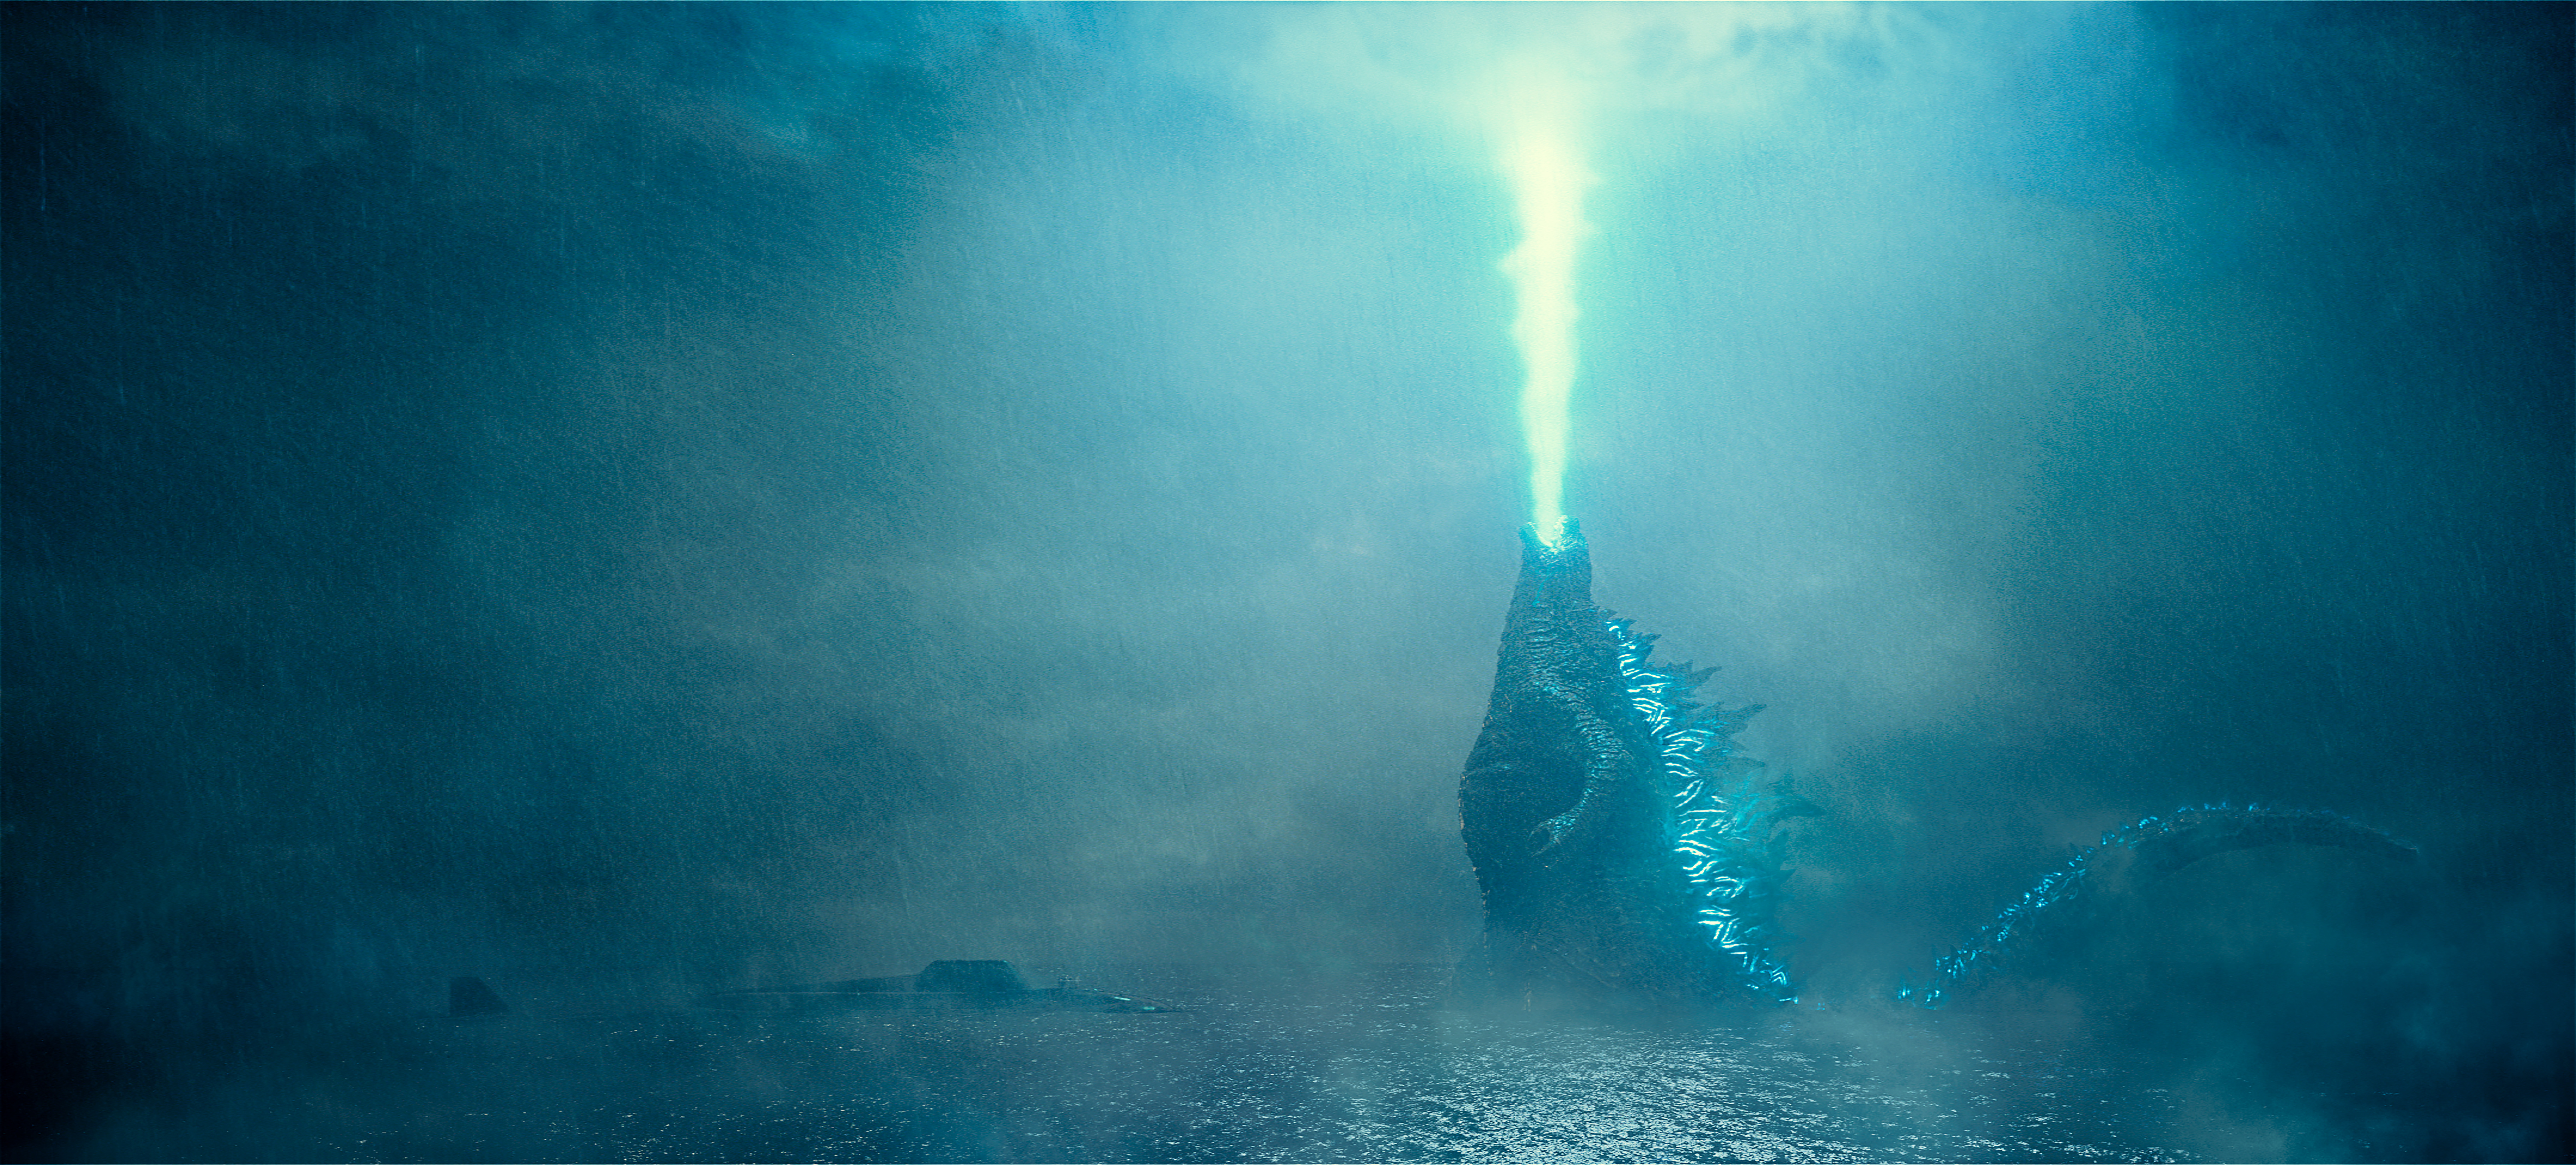 Godzilla: King of the Monsters Art